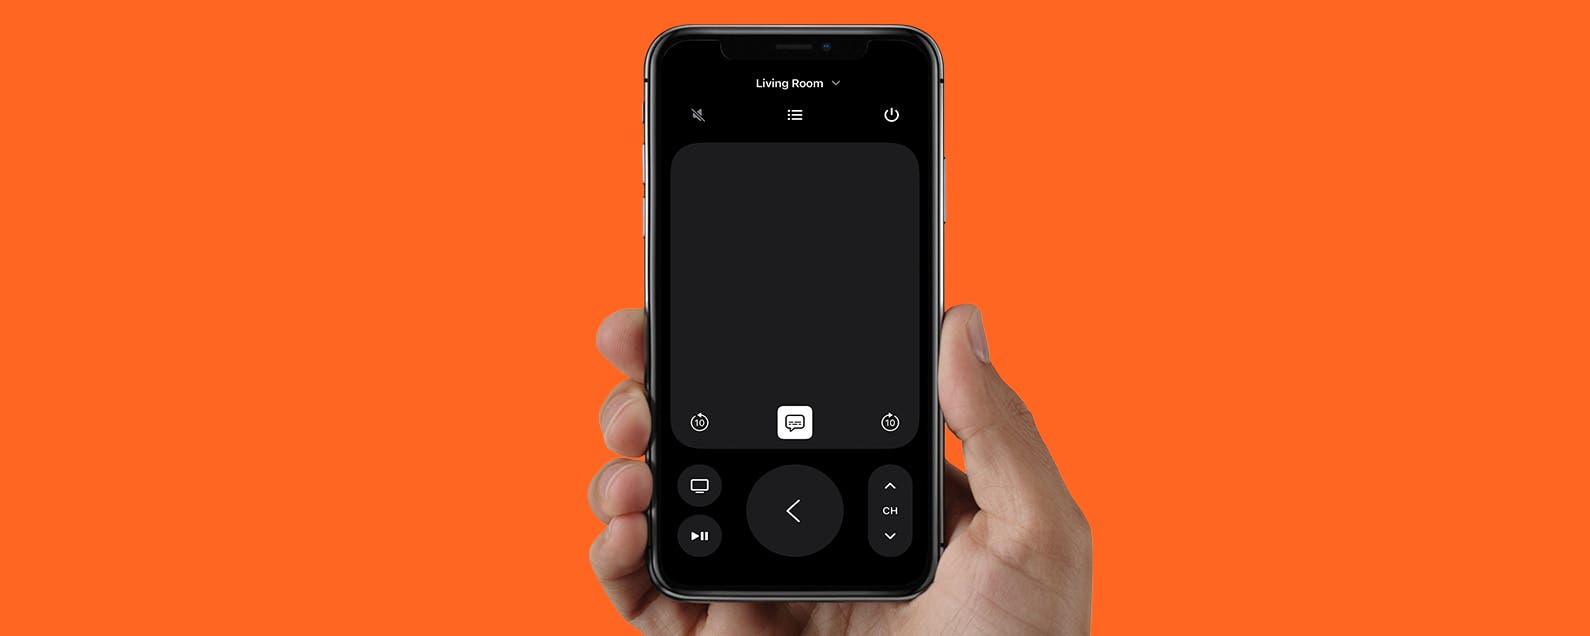 meddelelse identifikation bidragyder How to Use iPhone as Apple TV Remote 2022